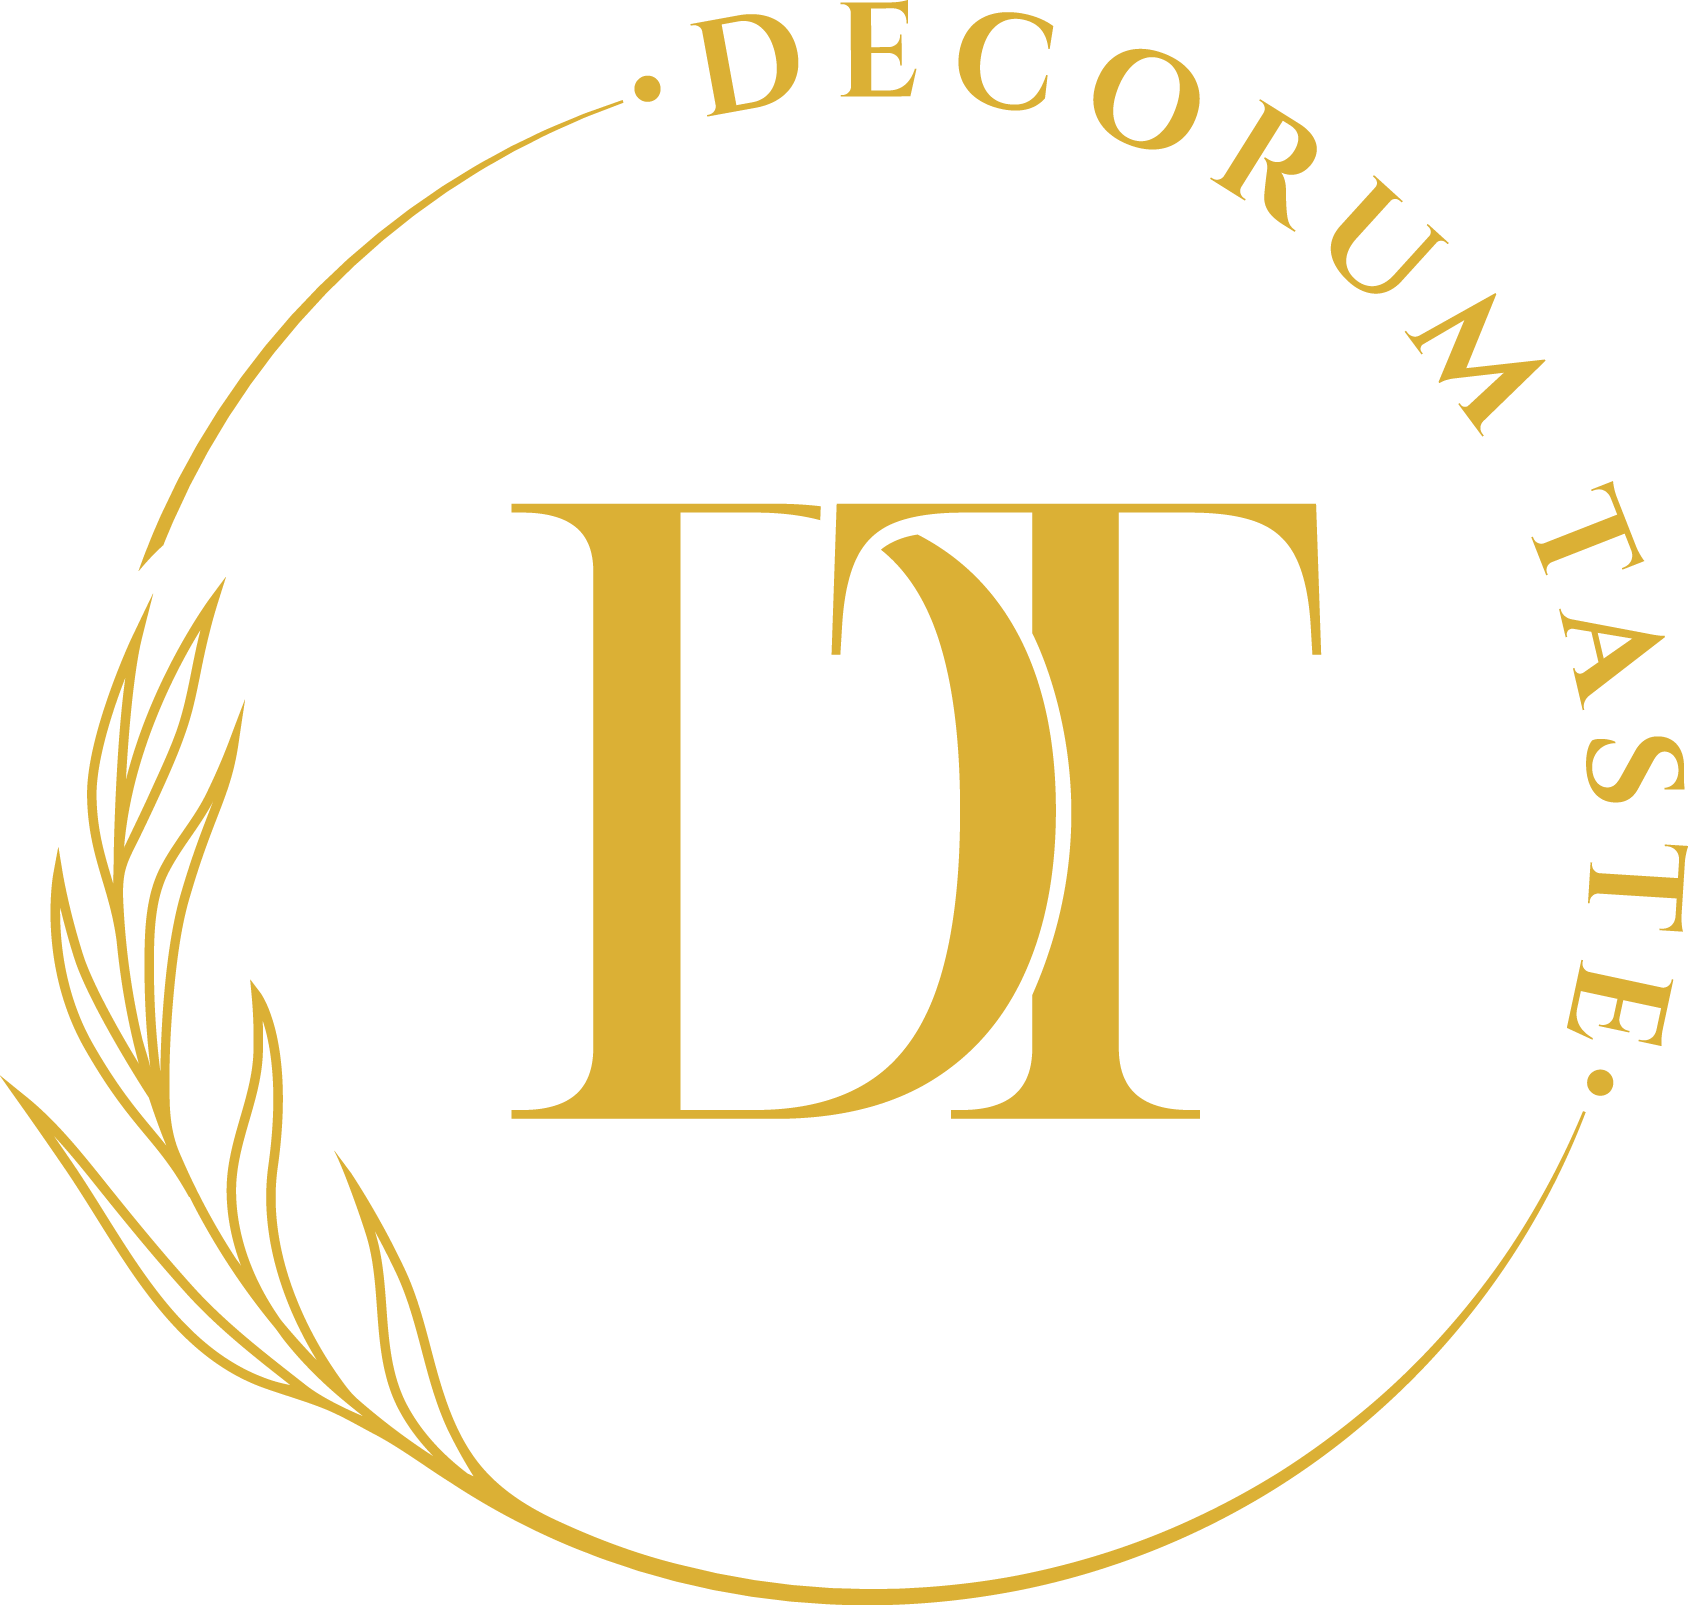 Decorum Taste luxury customisable cakes logo in gold.